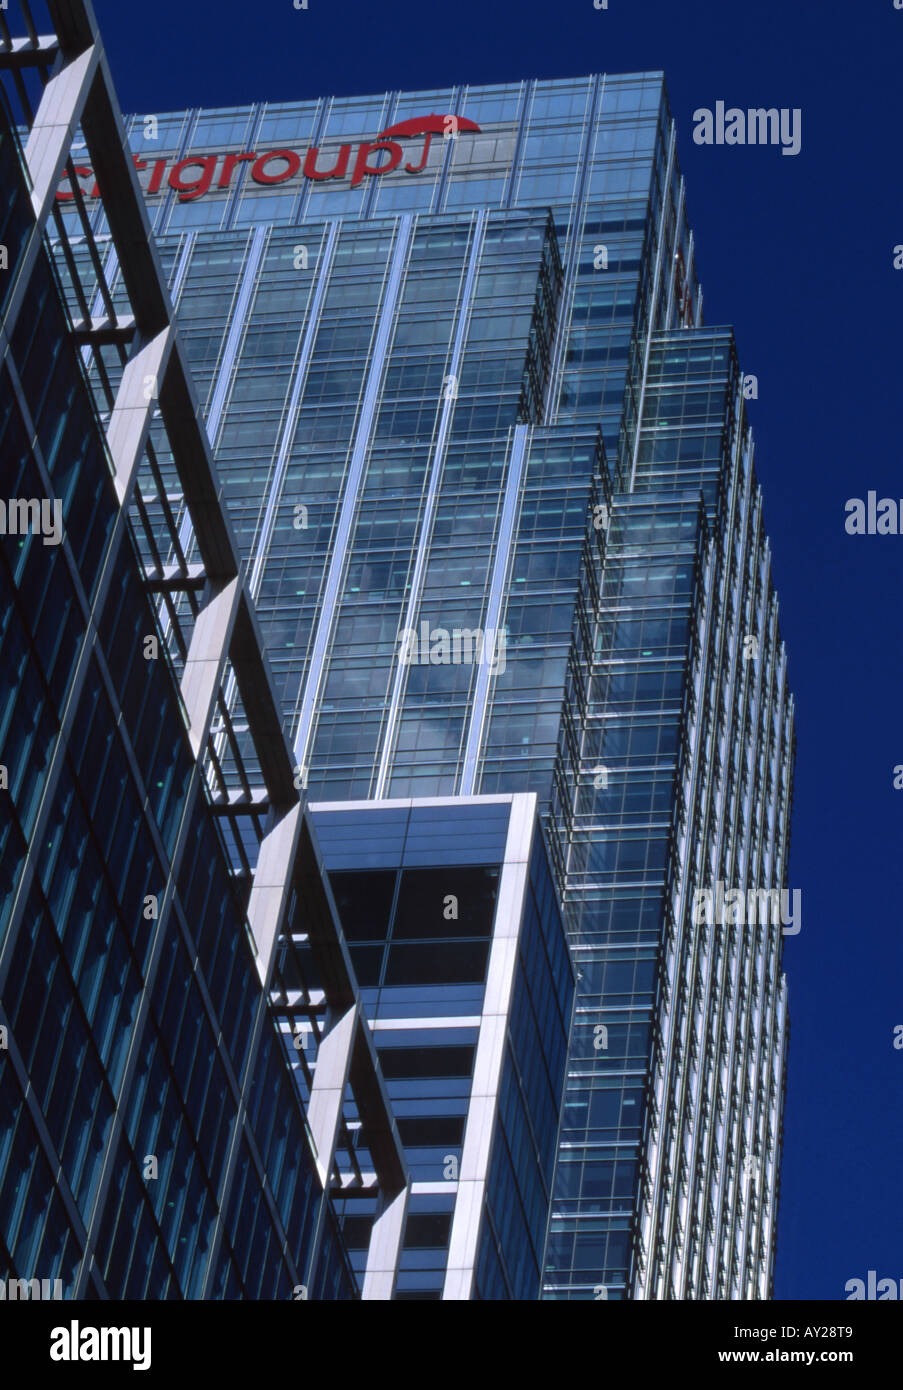 Citigroup tower Canary Wharf Stock Photo